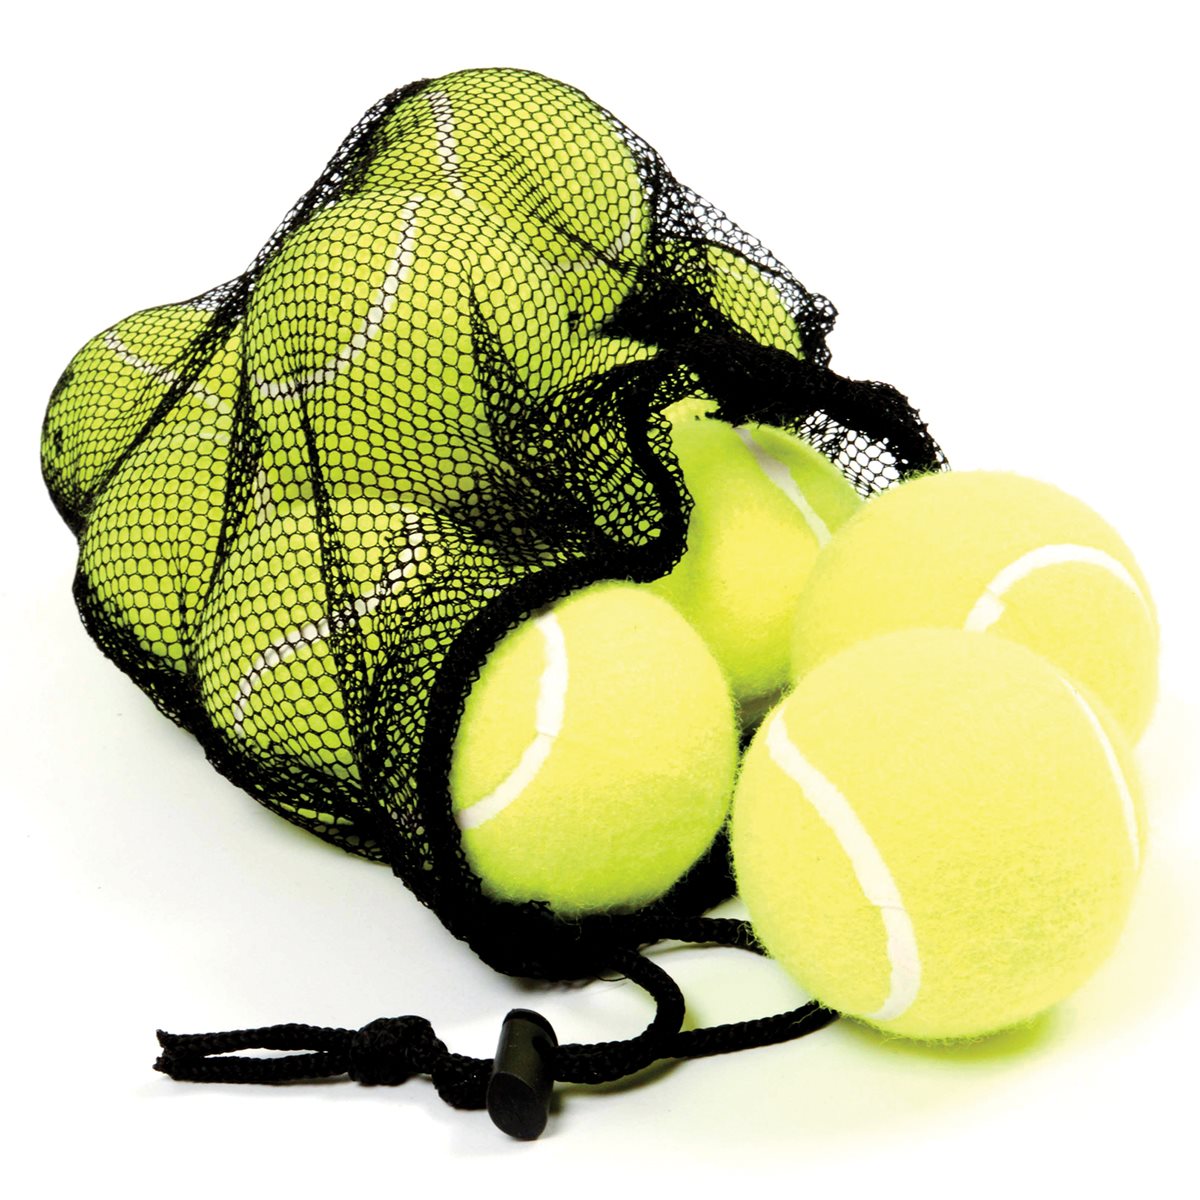 Slow tennis balls